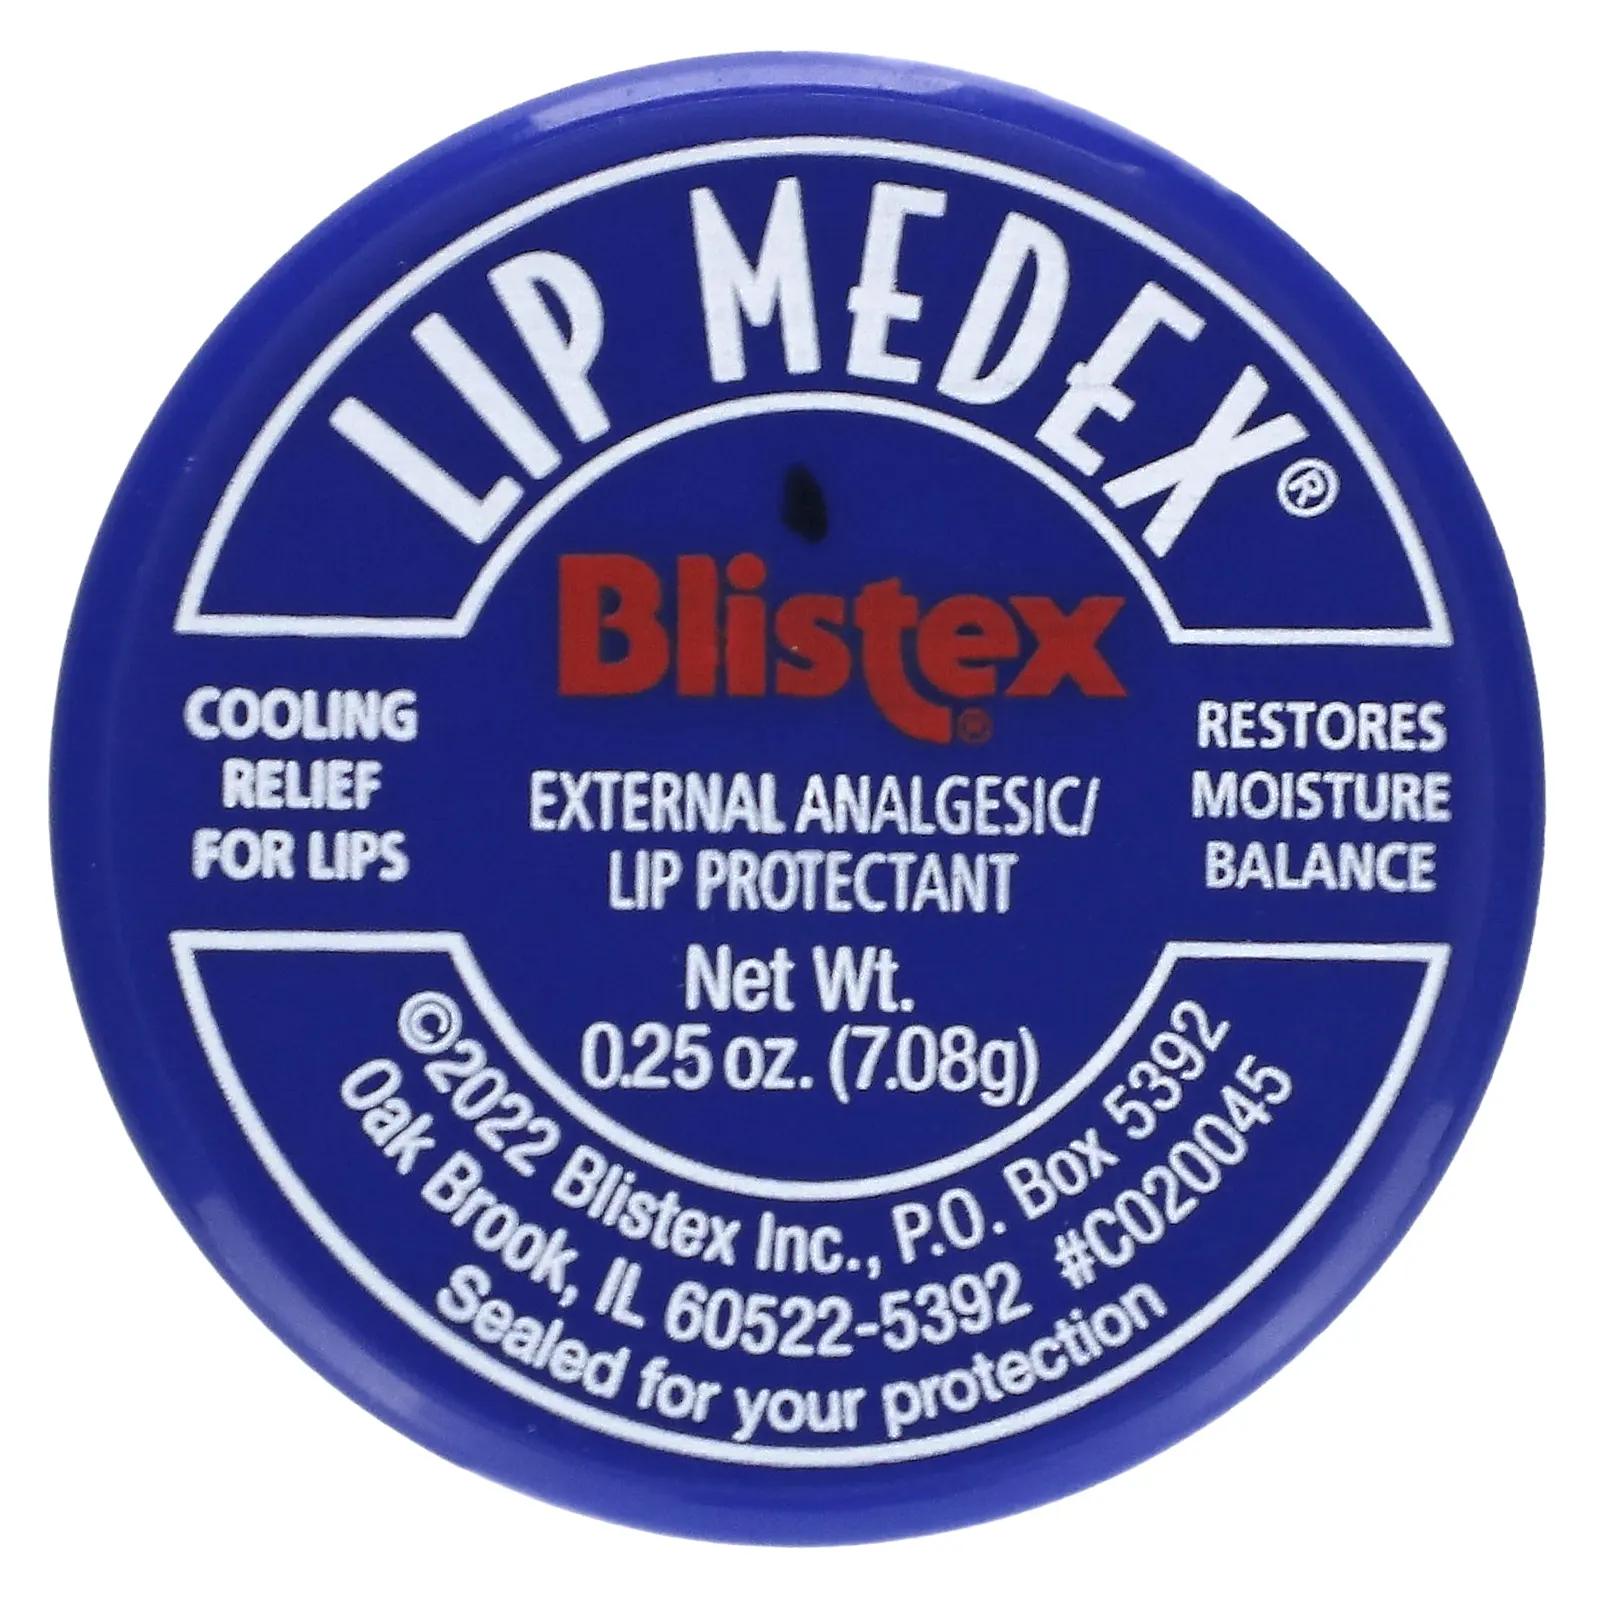 Blistex Lip Medex 3 баночки по 7,08 г (0,25 унции) цена и фото